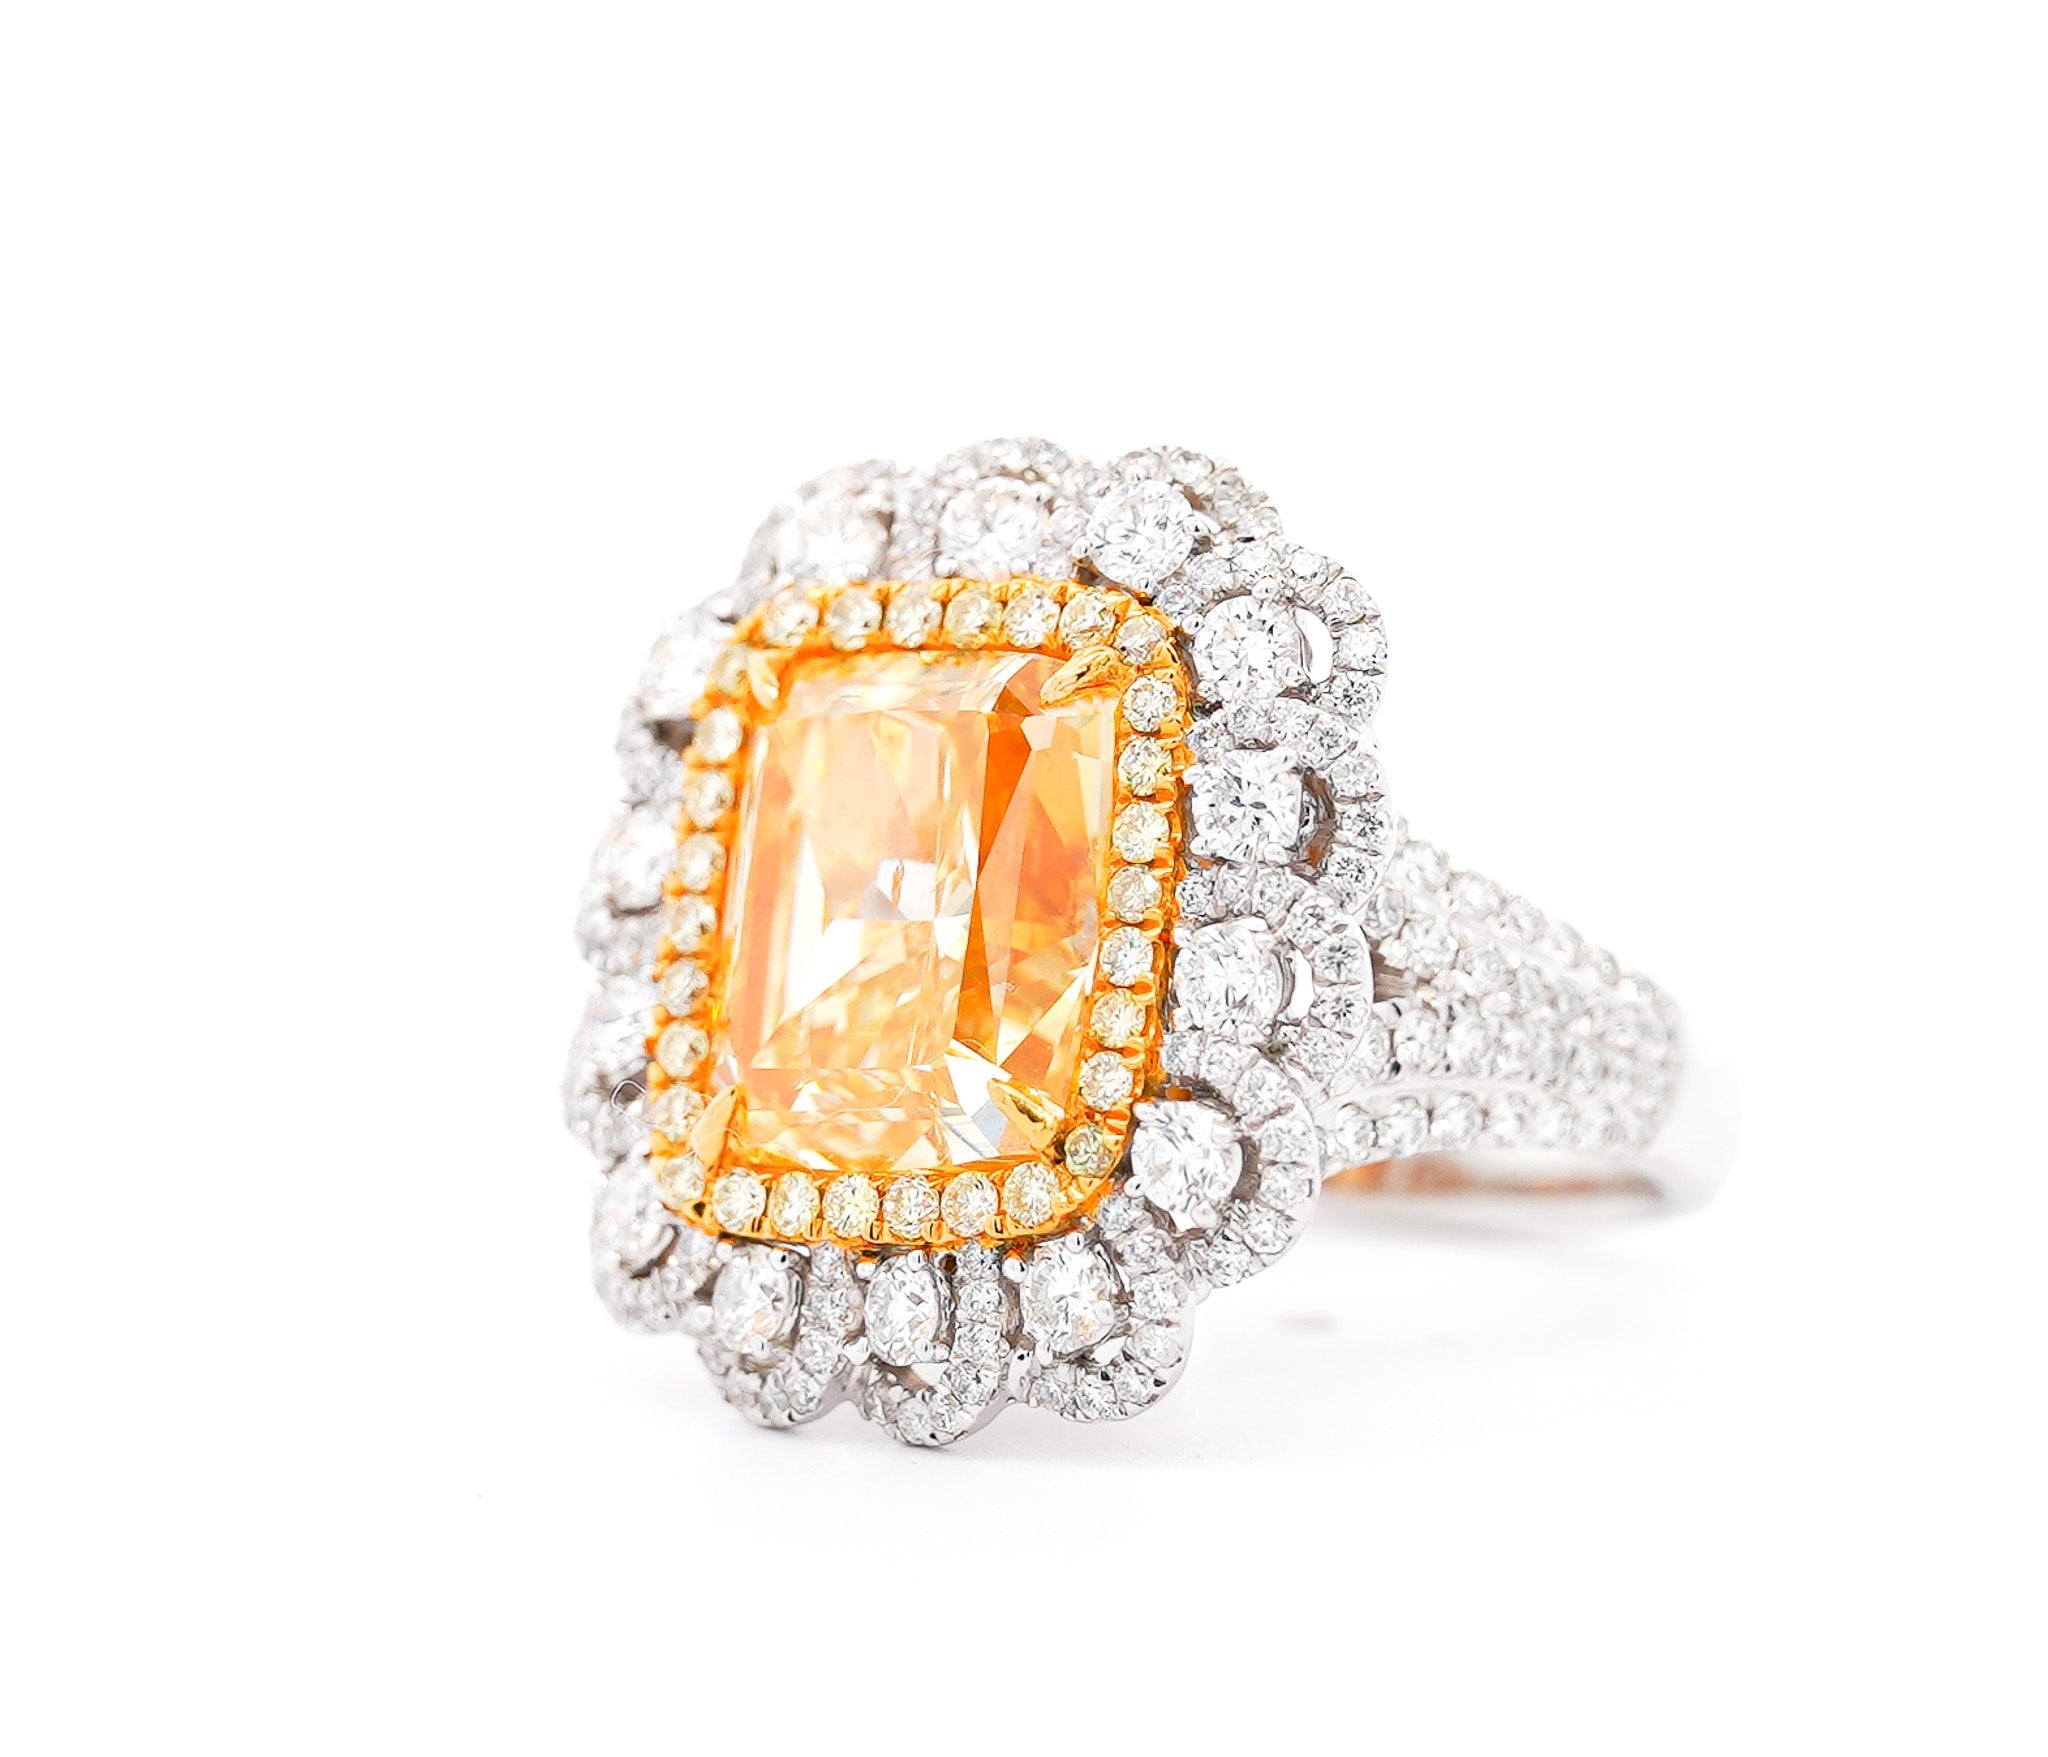 7 Carat Fancy Intense Yellow Radiant Cut Diamond and Diamond Halo Ring | GIA Certified